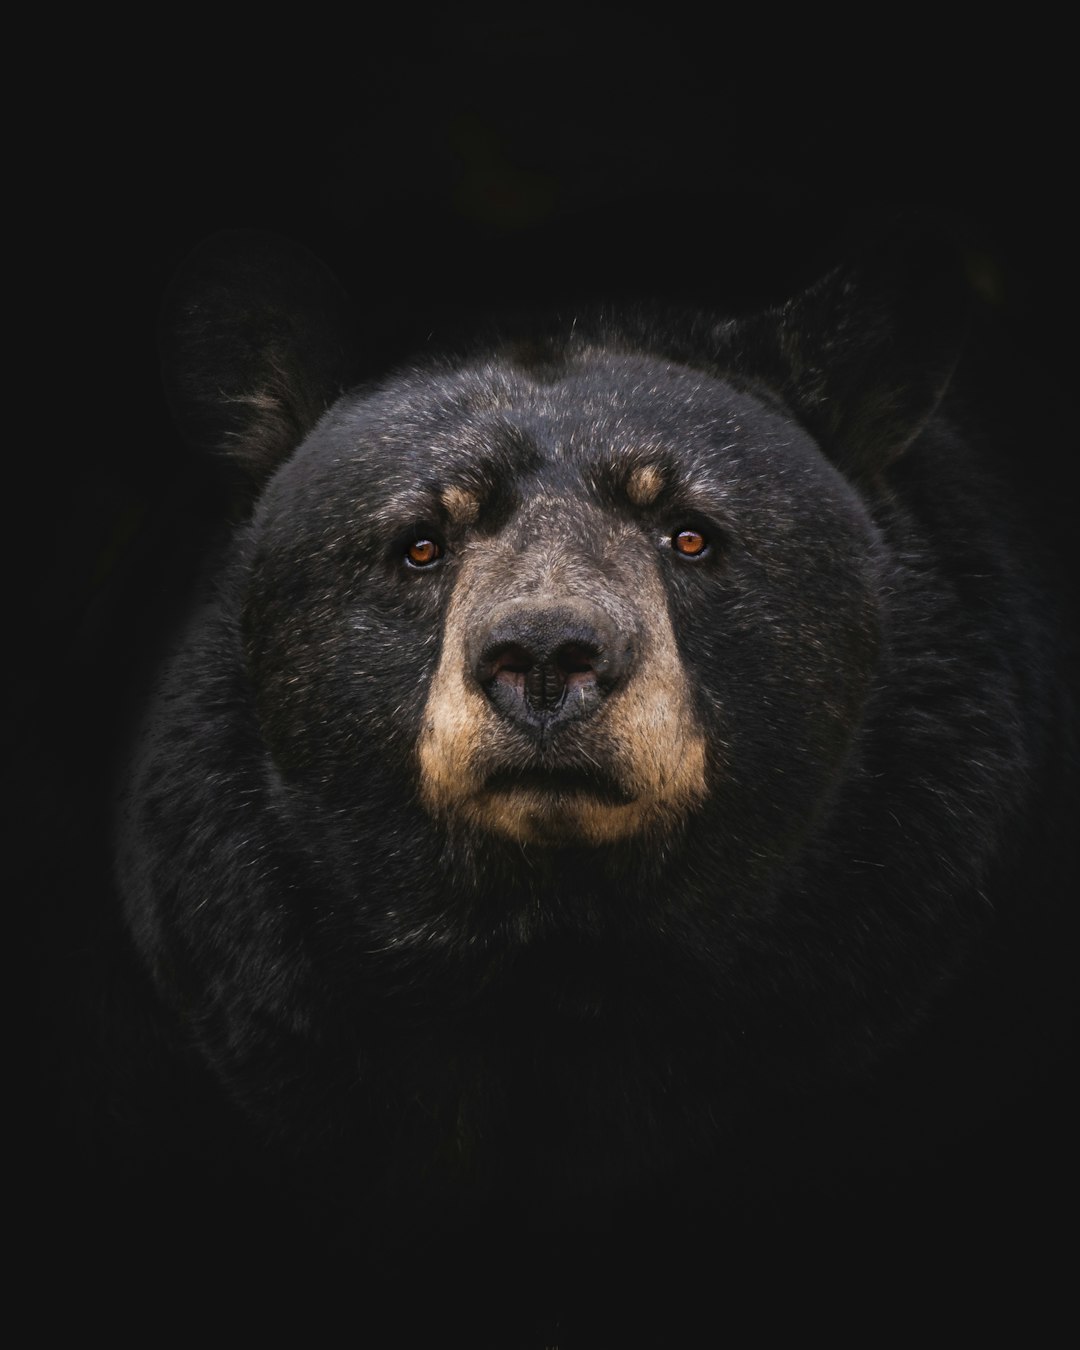  black bear on brown wooden tree branch bear